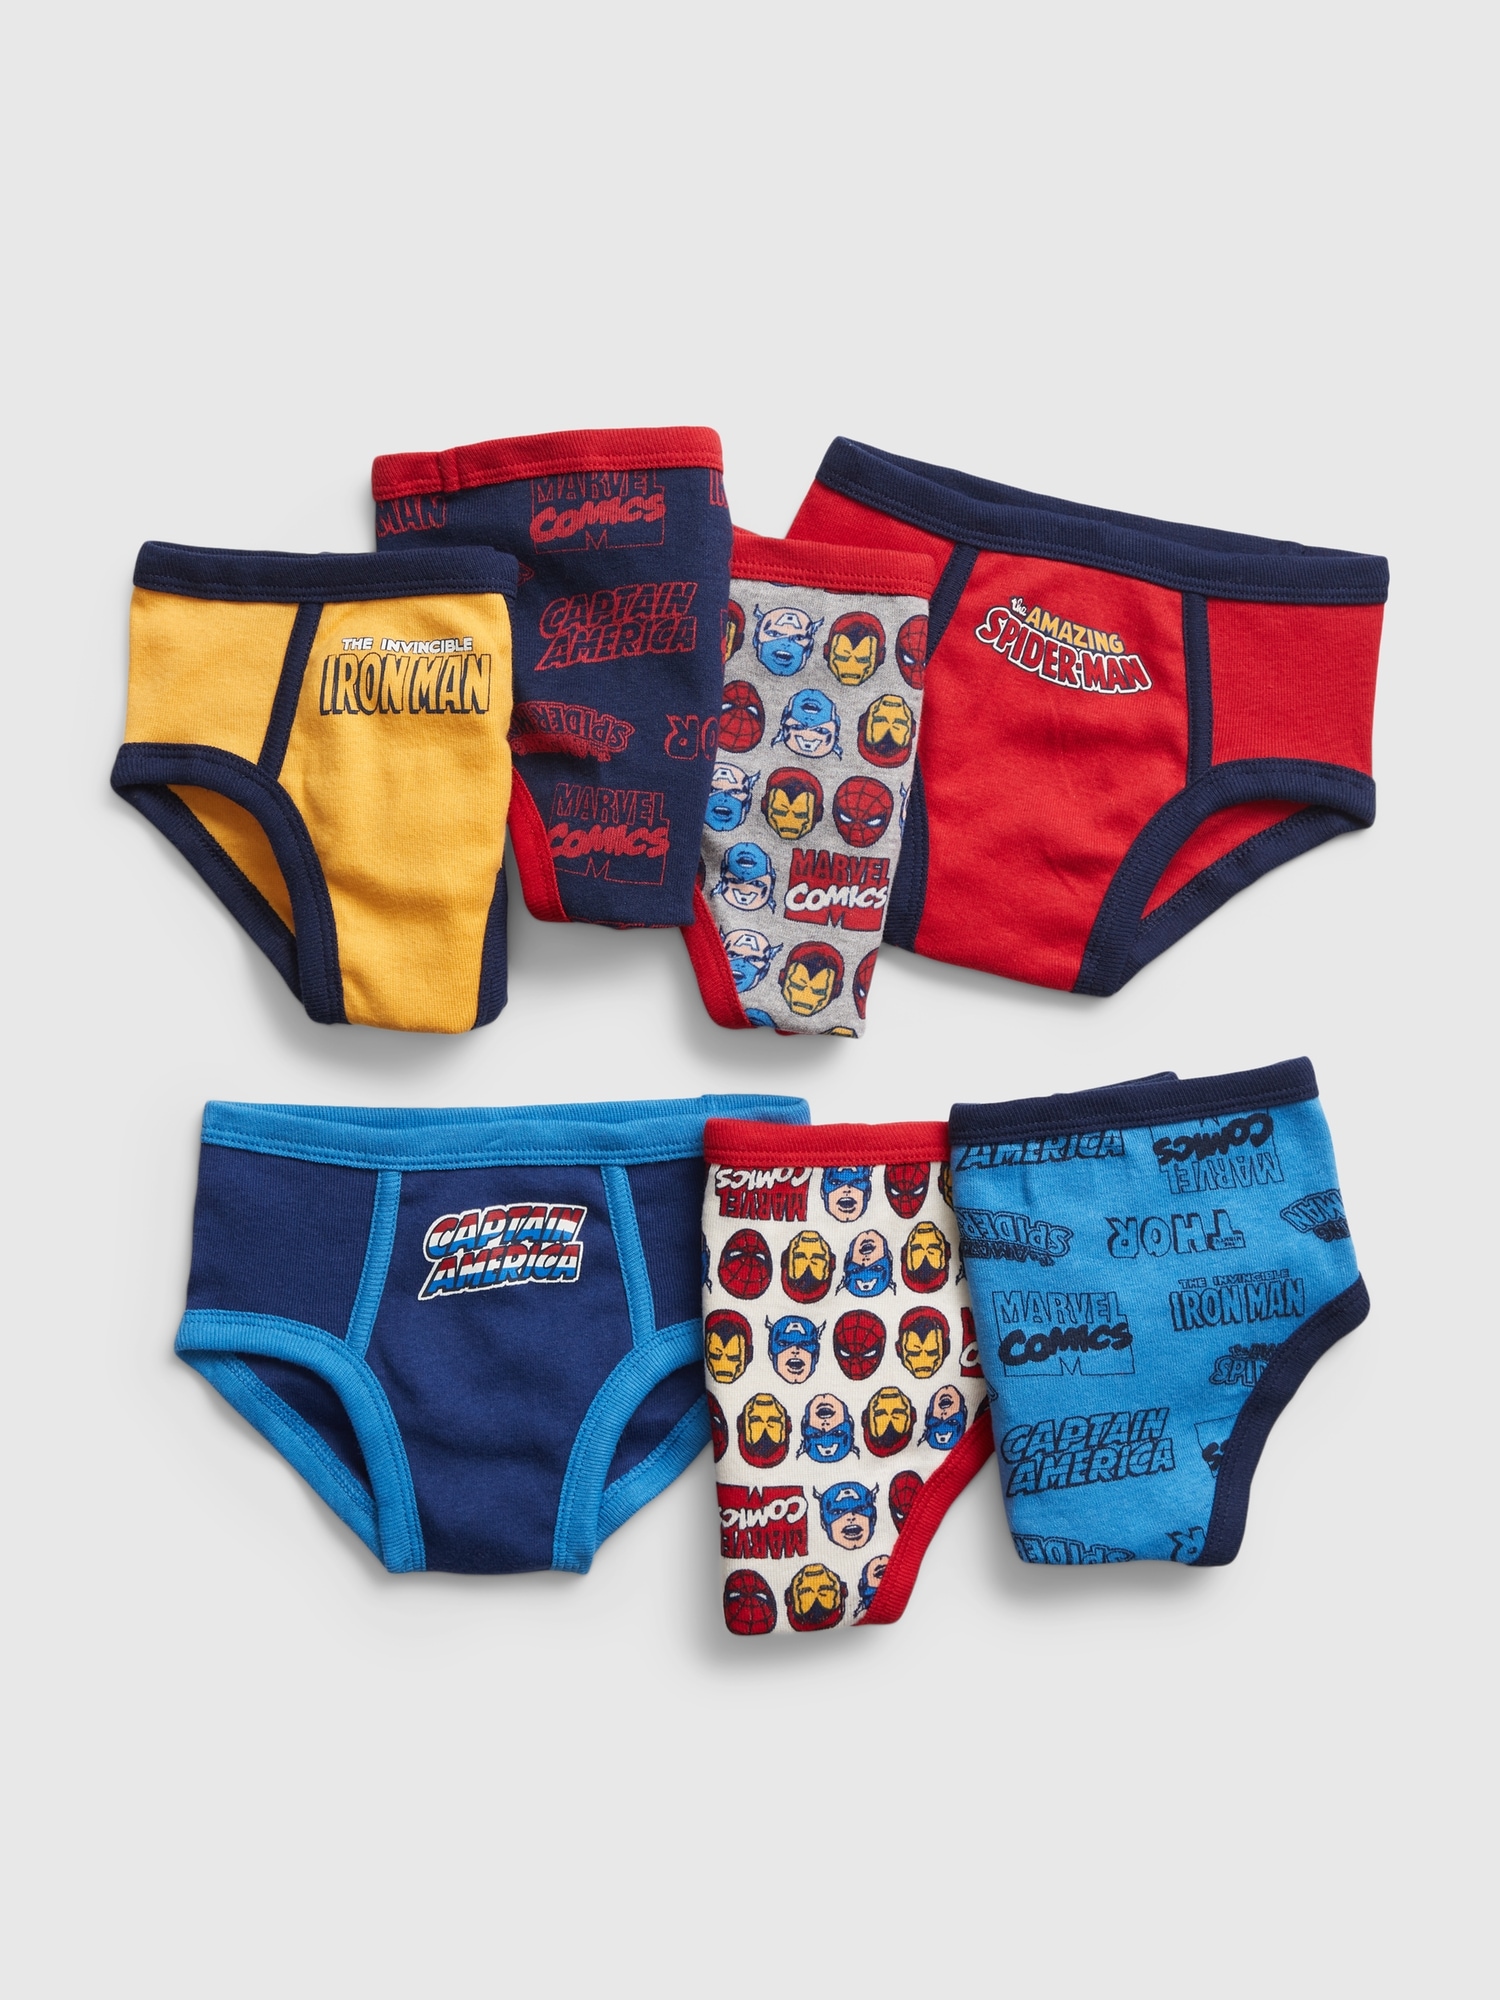 Buy Marvel Boys 3 Pack Spiderman Underwear - Toddler 5T Online at